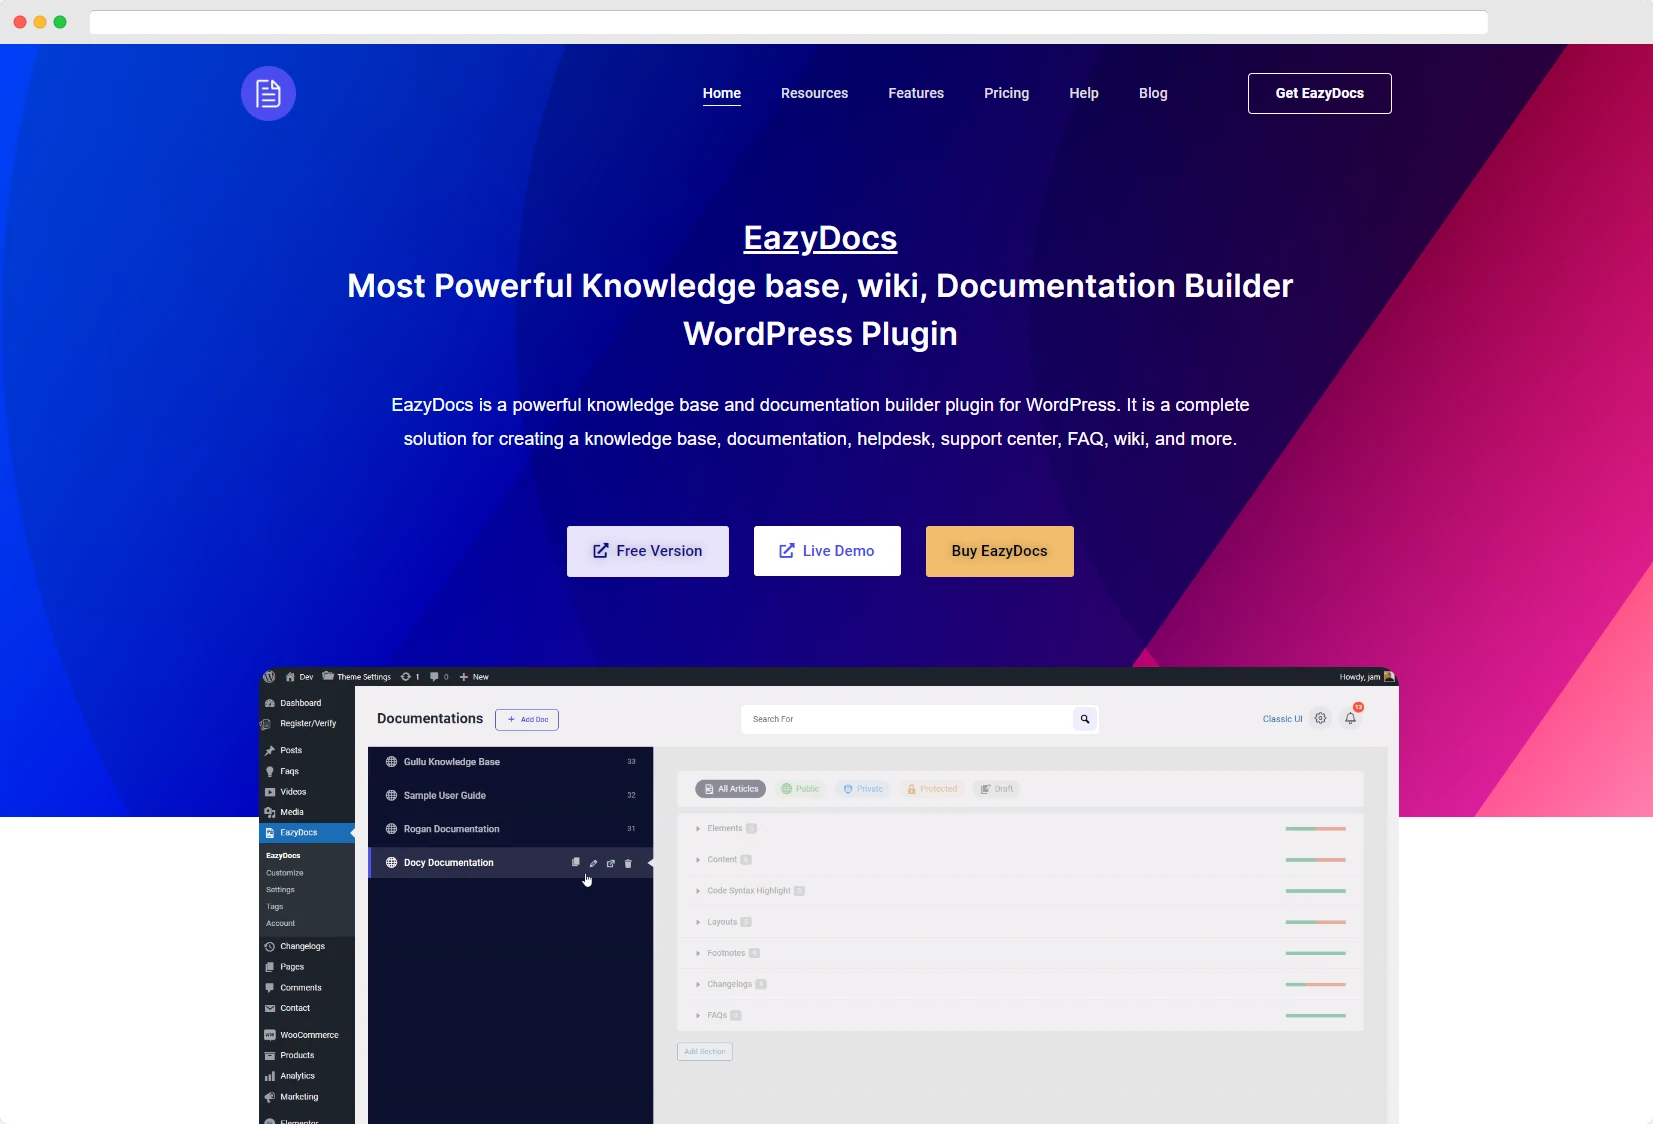 EazyDocs – Most Powerful Knowledge base, wiki, Documentation Plugins
